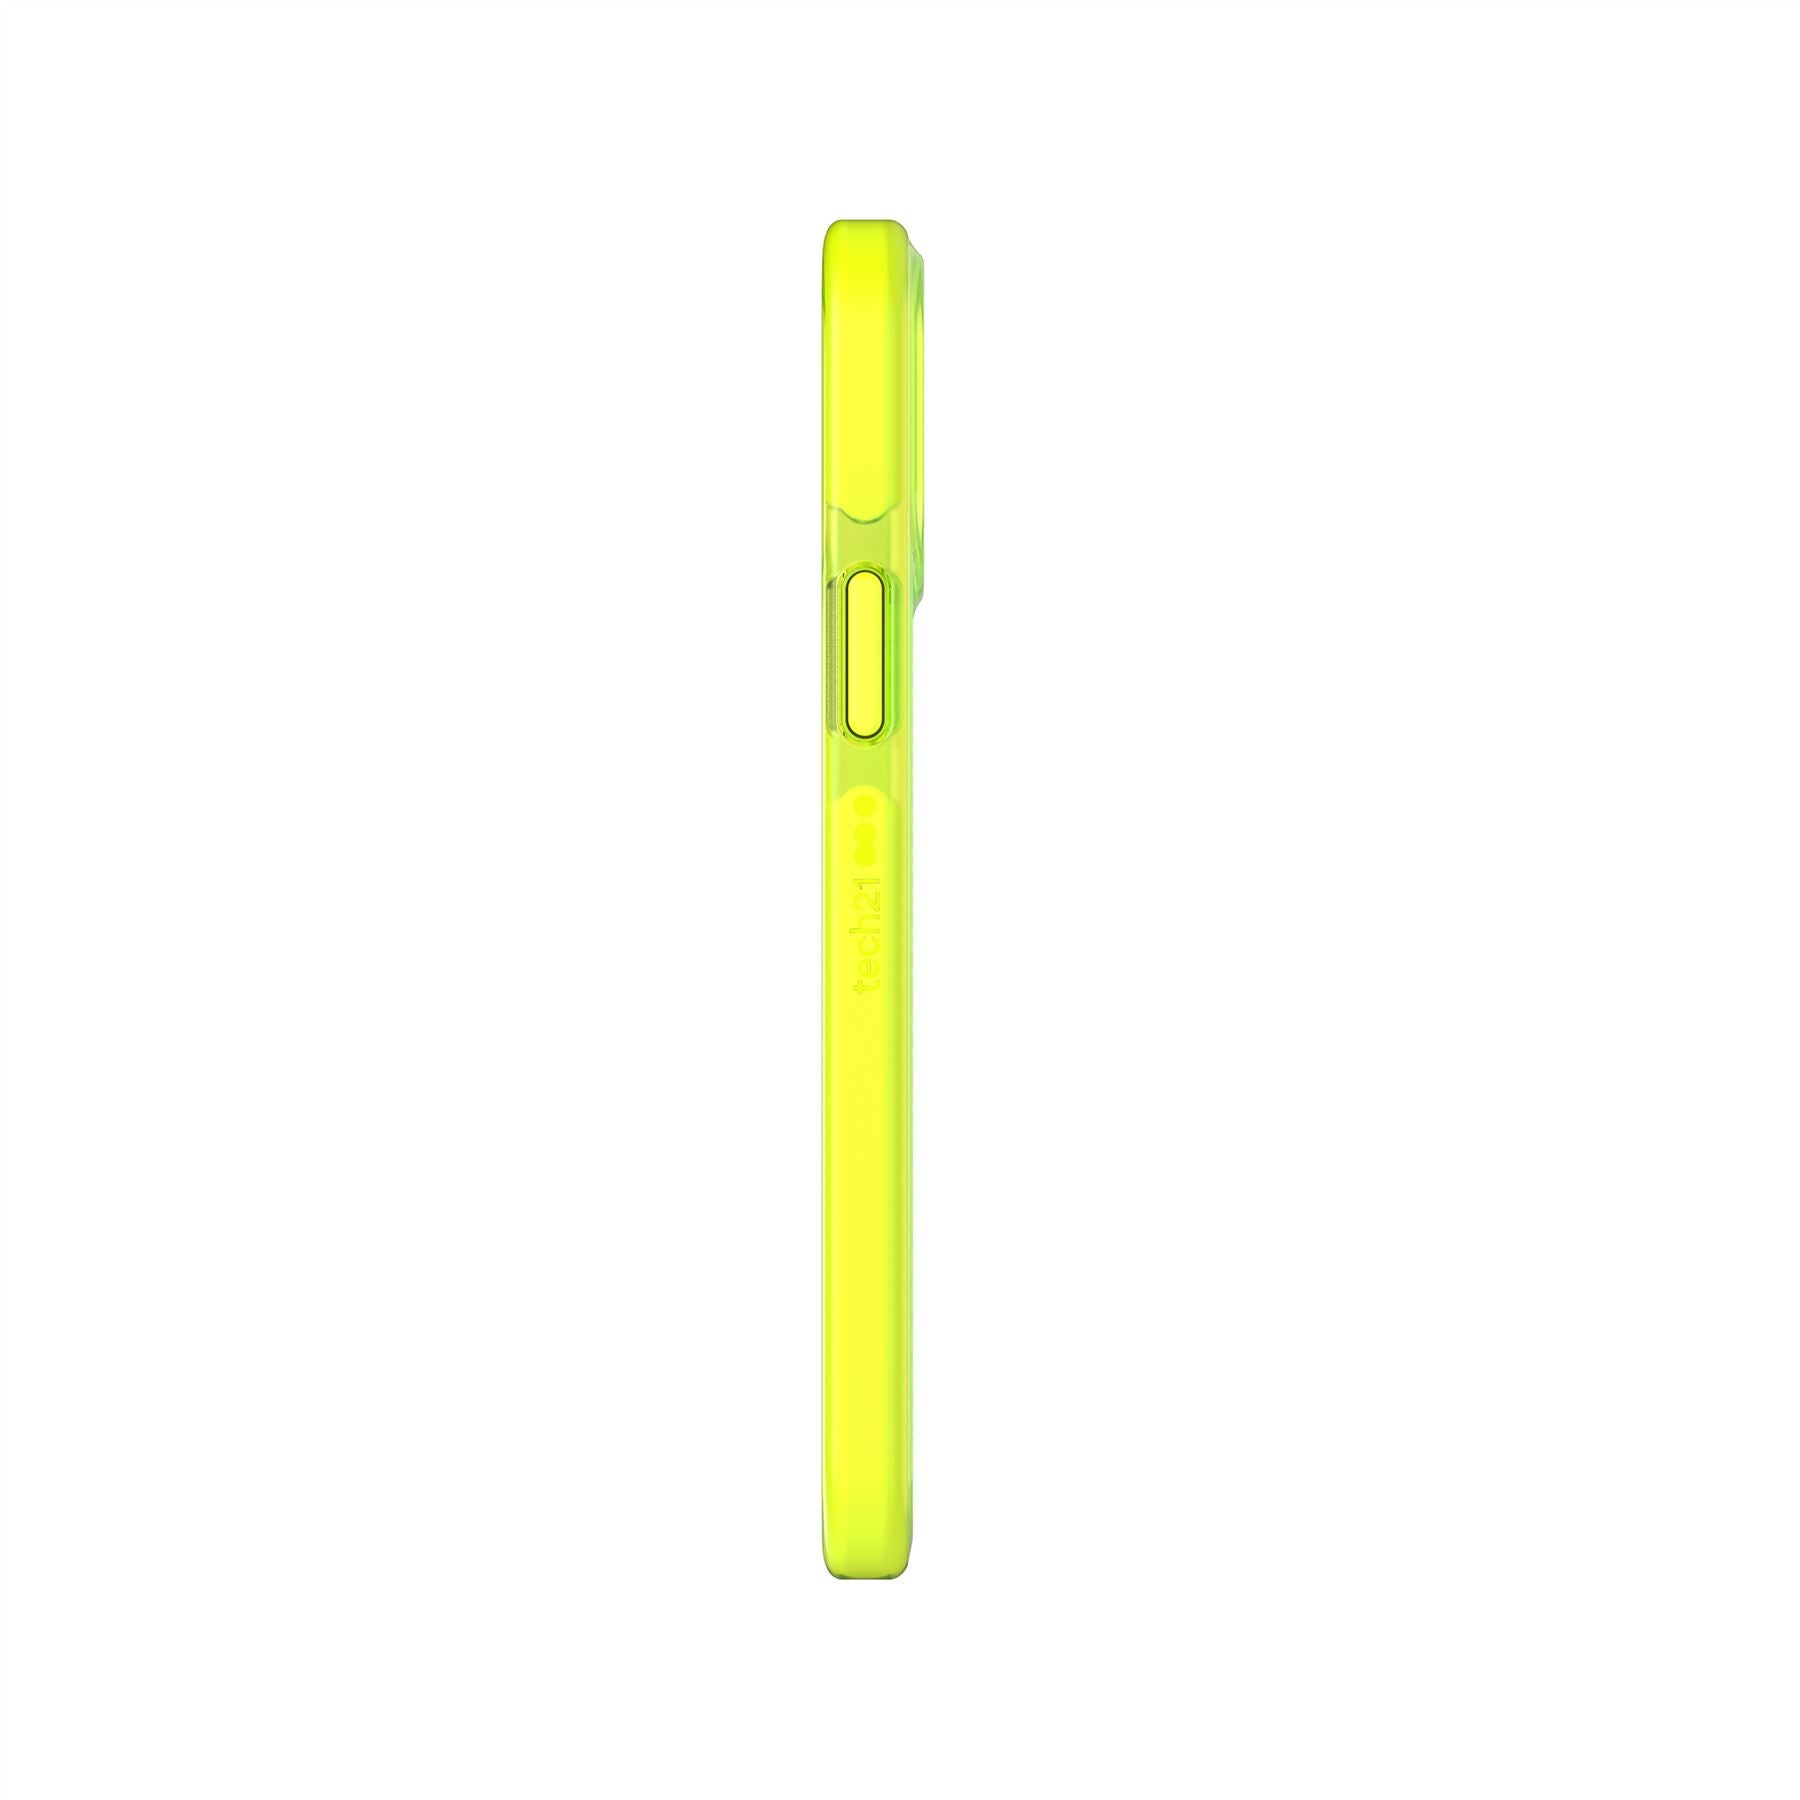 Evo Check - Apple iPhone 12/12 Pro Case - Luminous Yellow | Tech21 